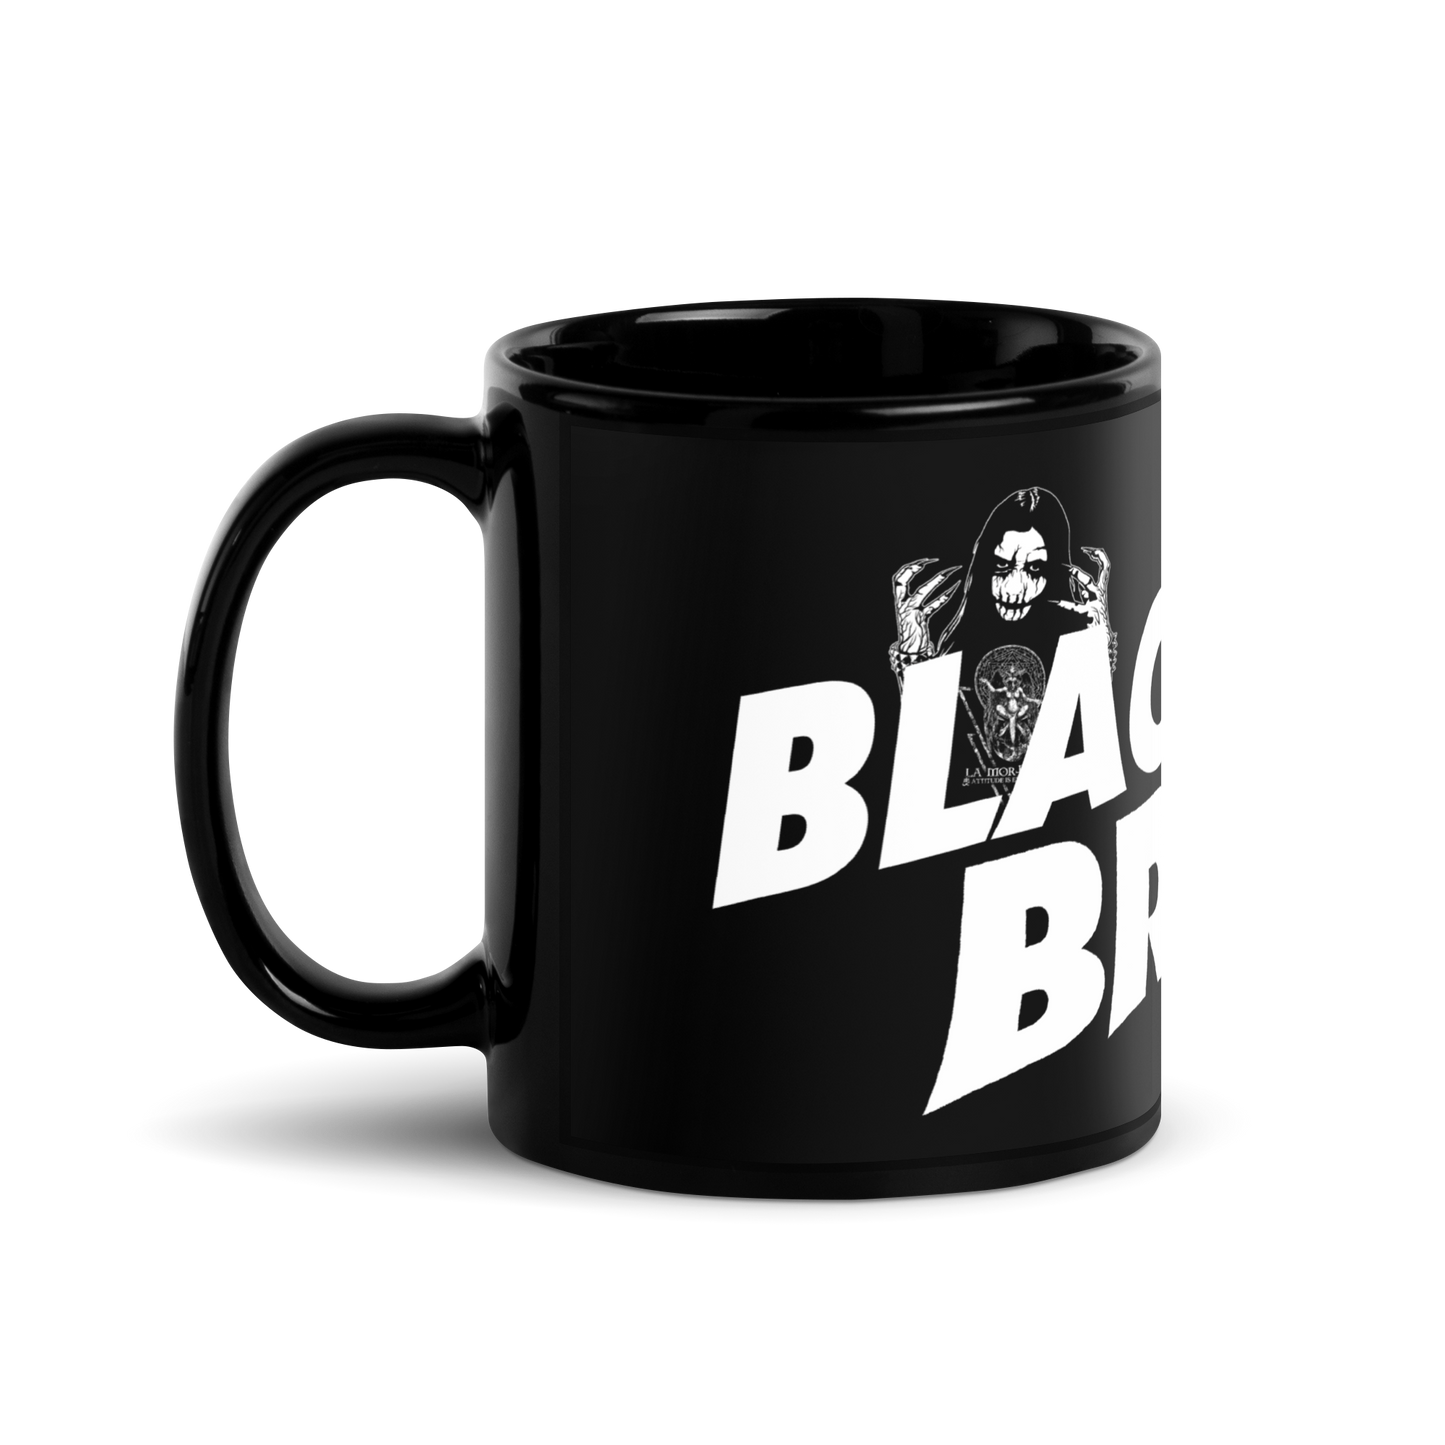 Blackened Brew • Black Glossy Mug